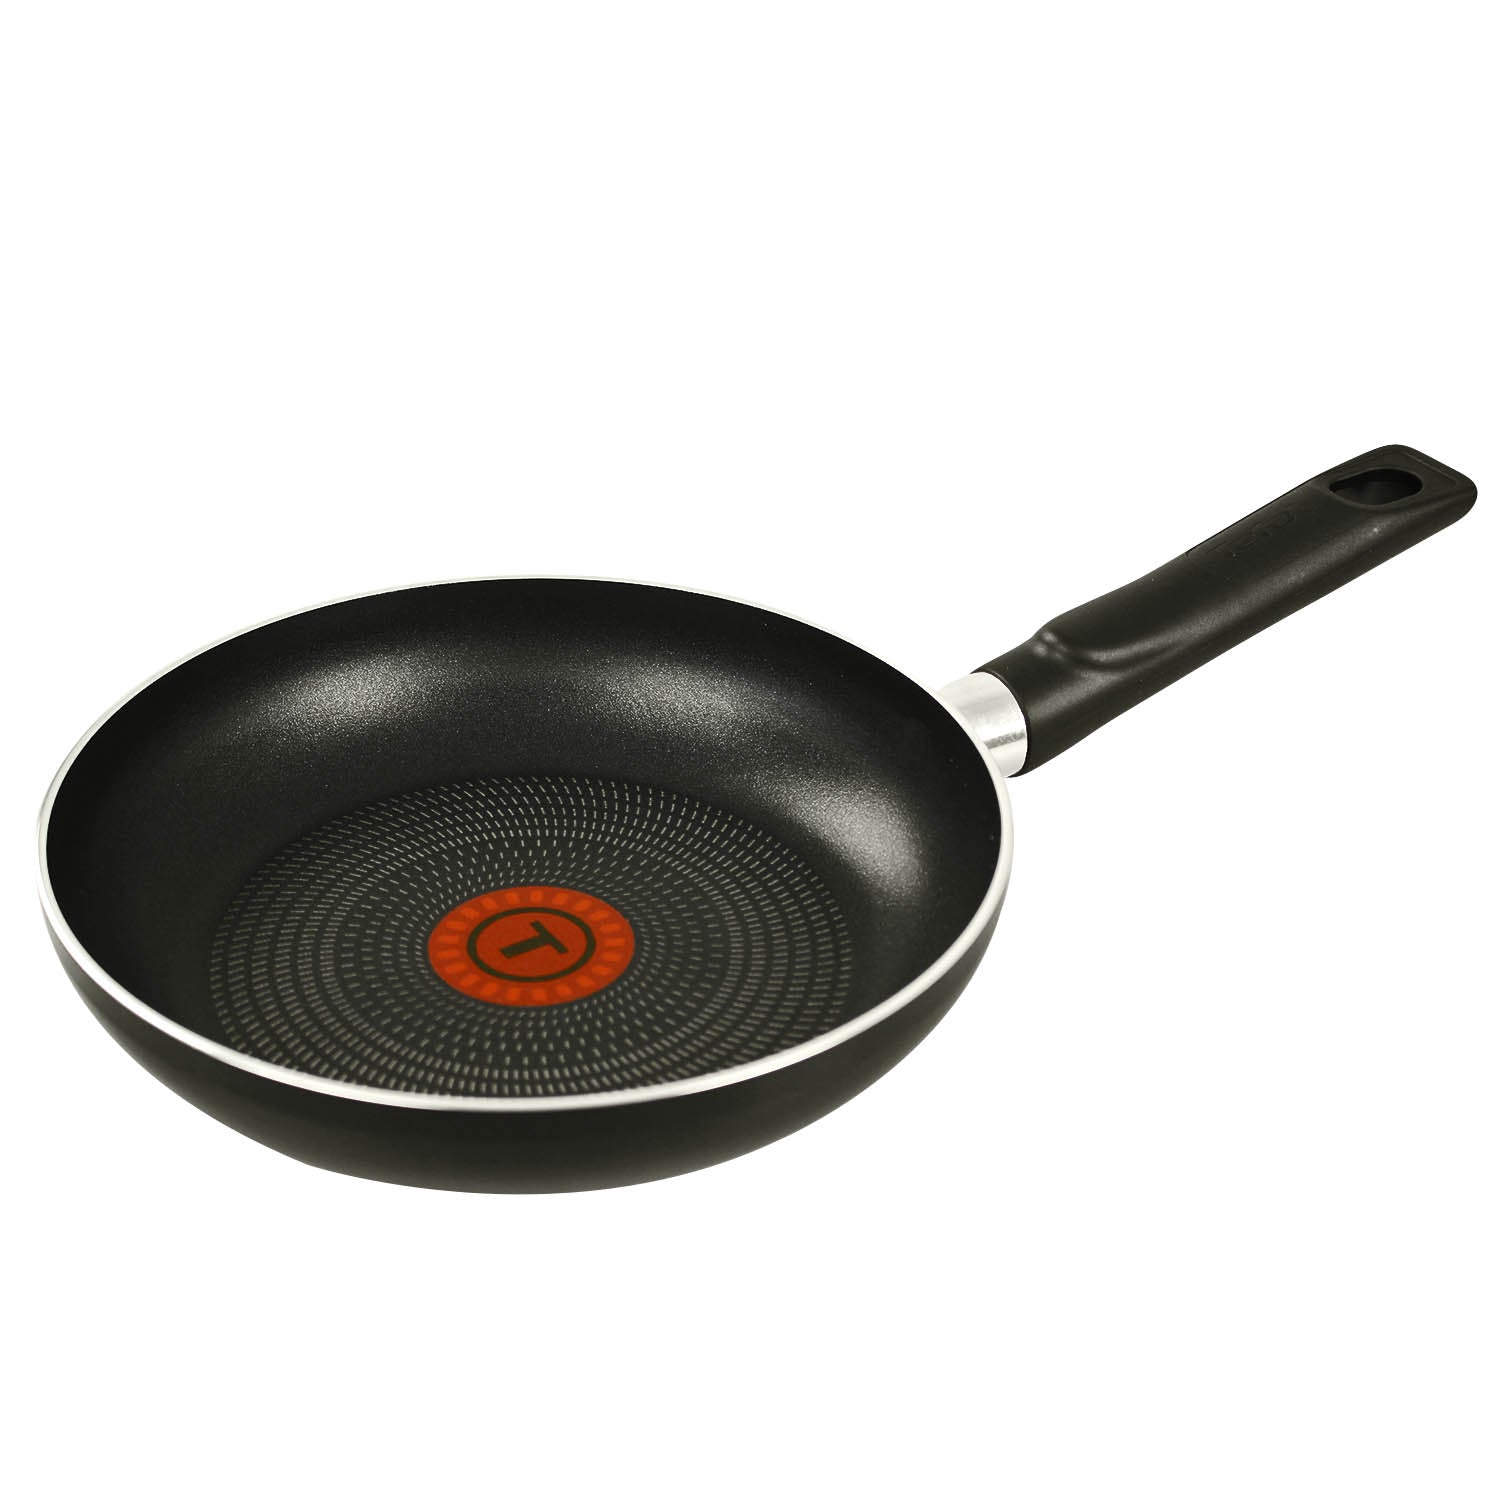 Tefal 24cm Issencia Pro Non-Stick Frying Pan